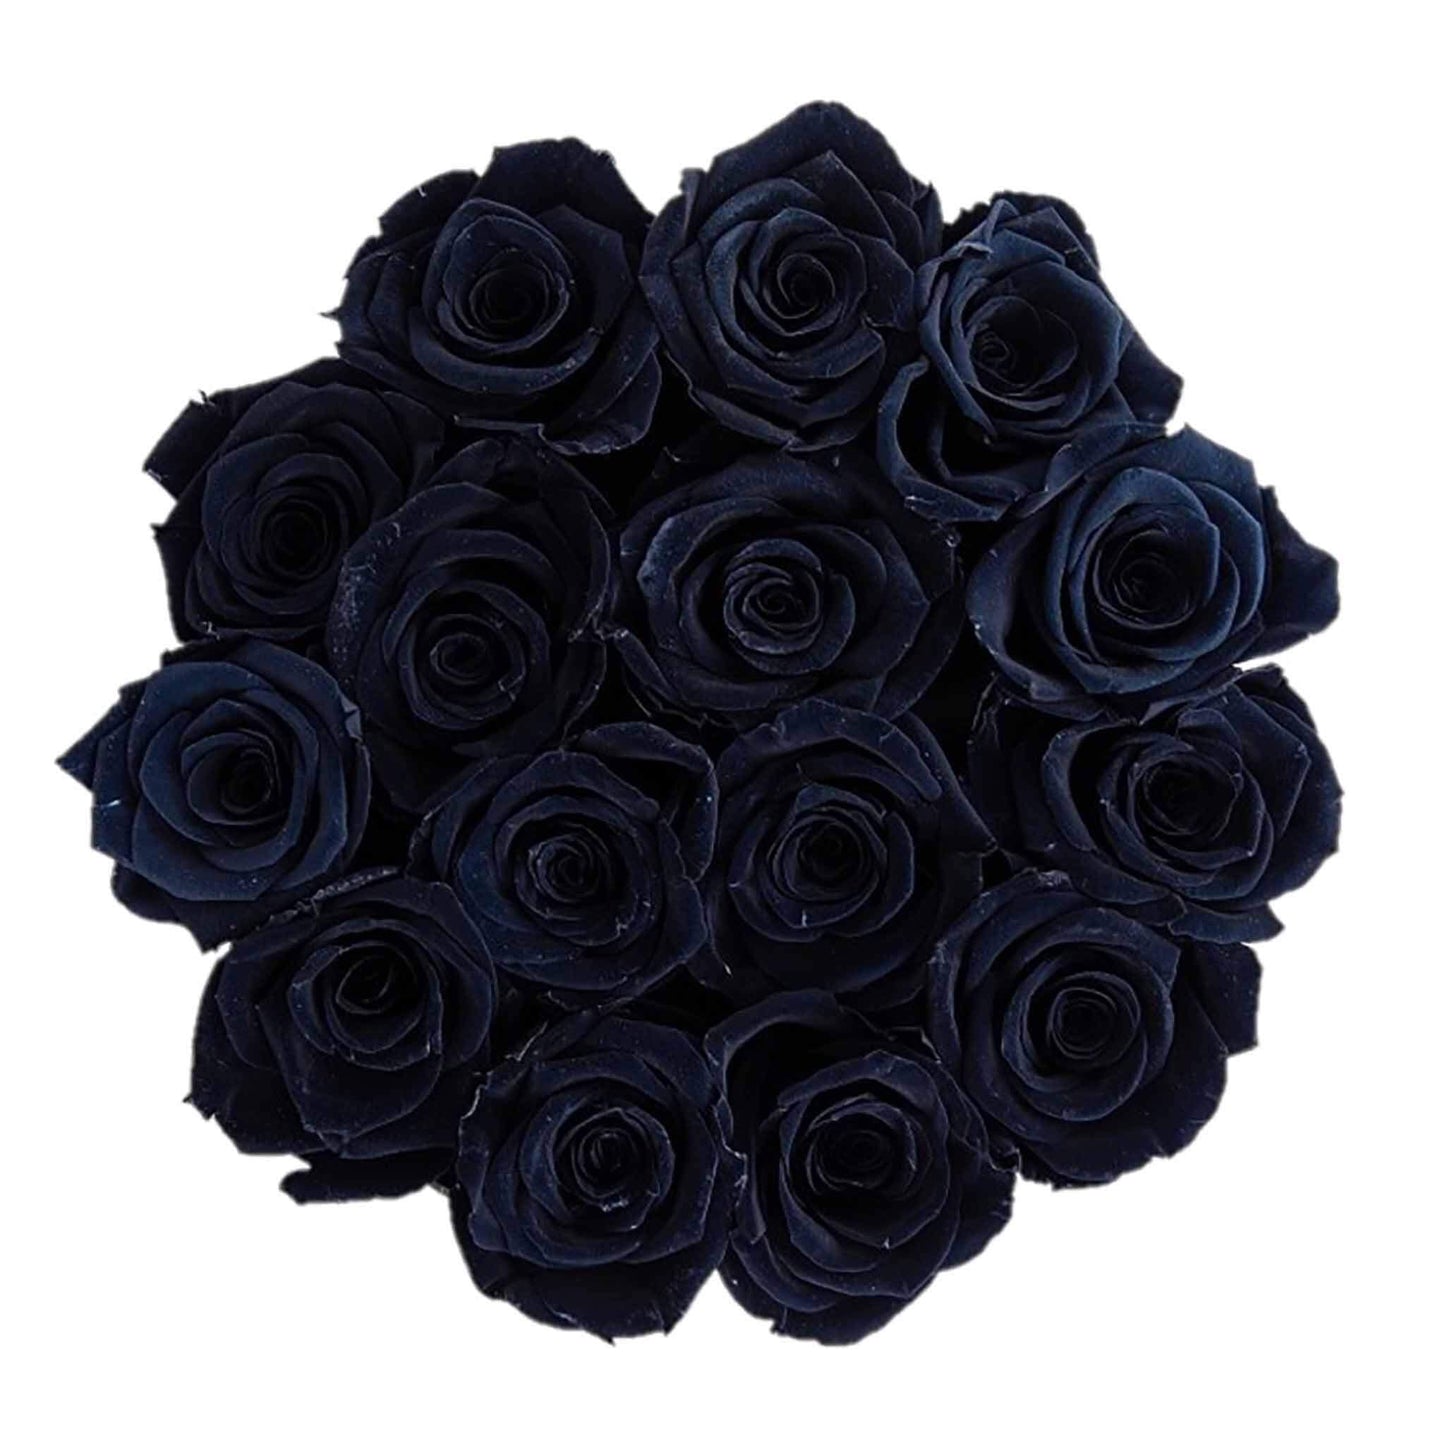 Real Preserved Black Eternal Roses